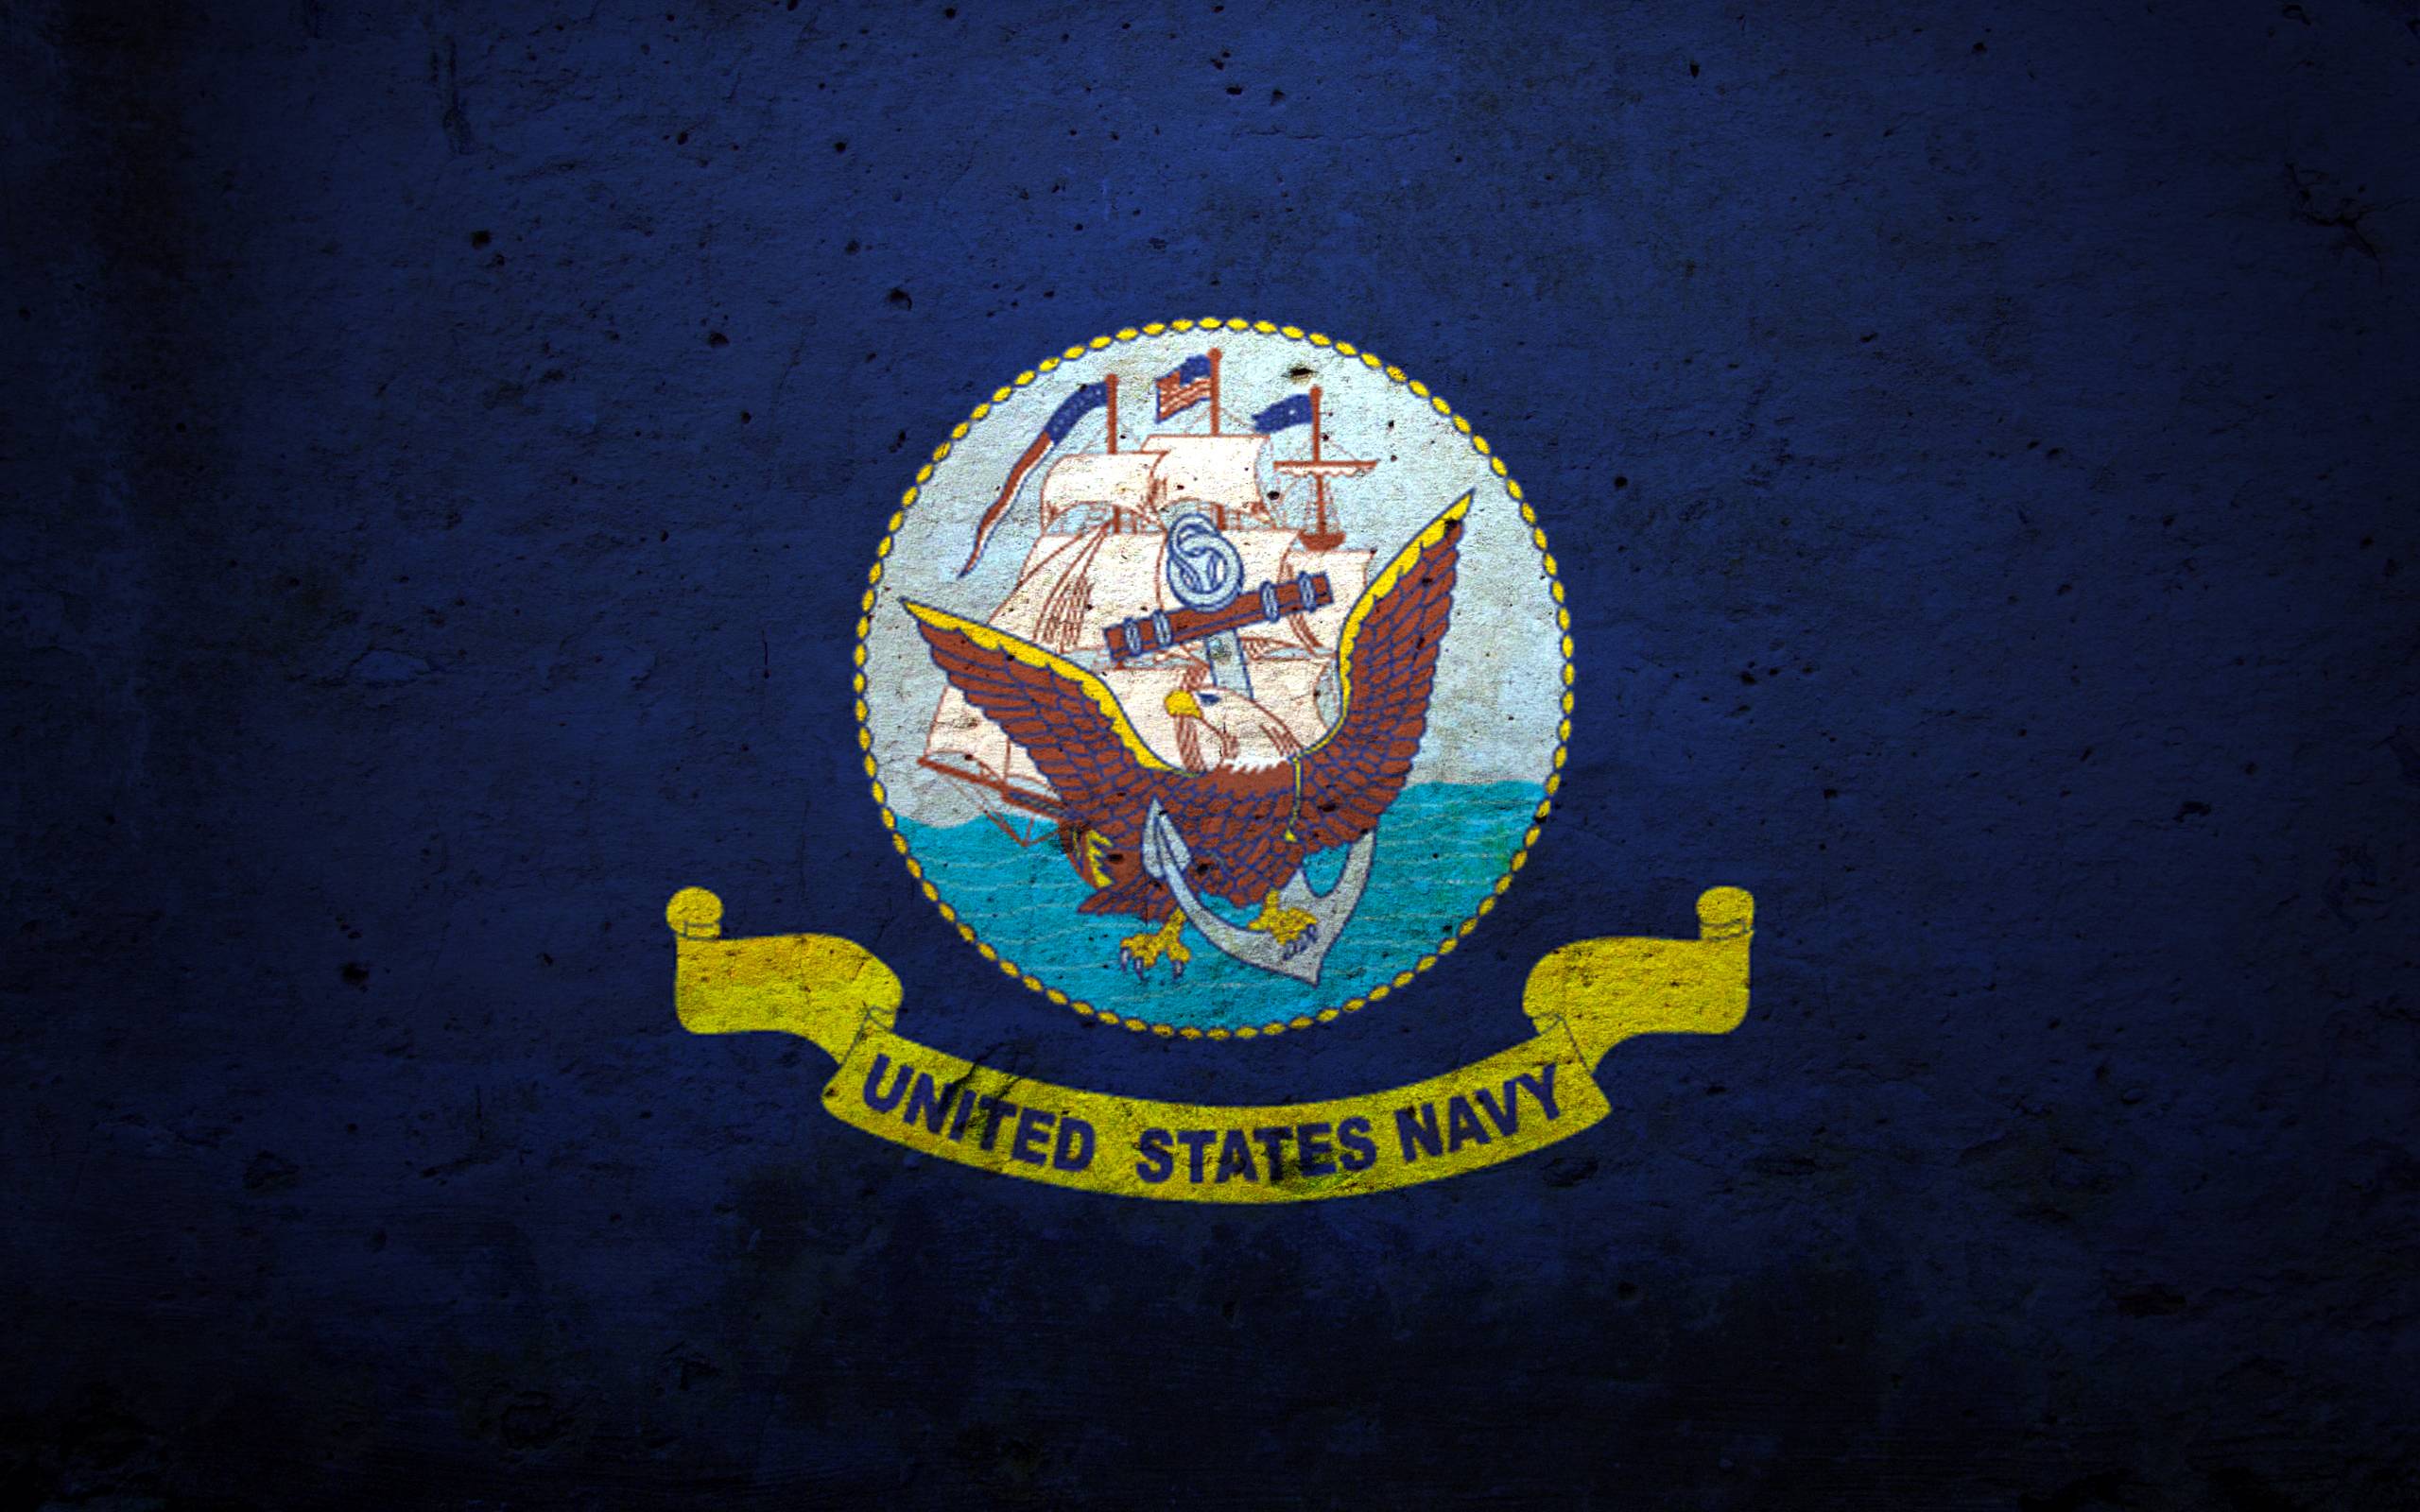 United states navy wallpaper